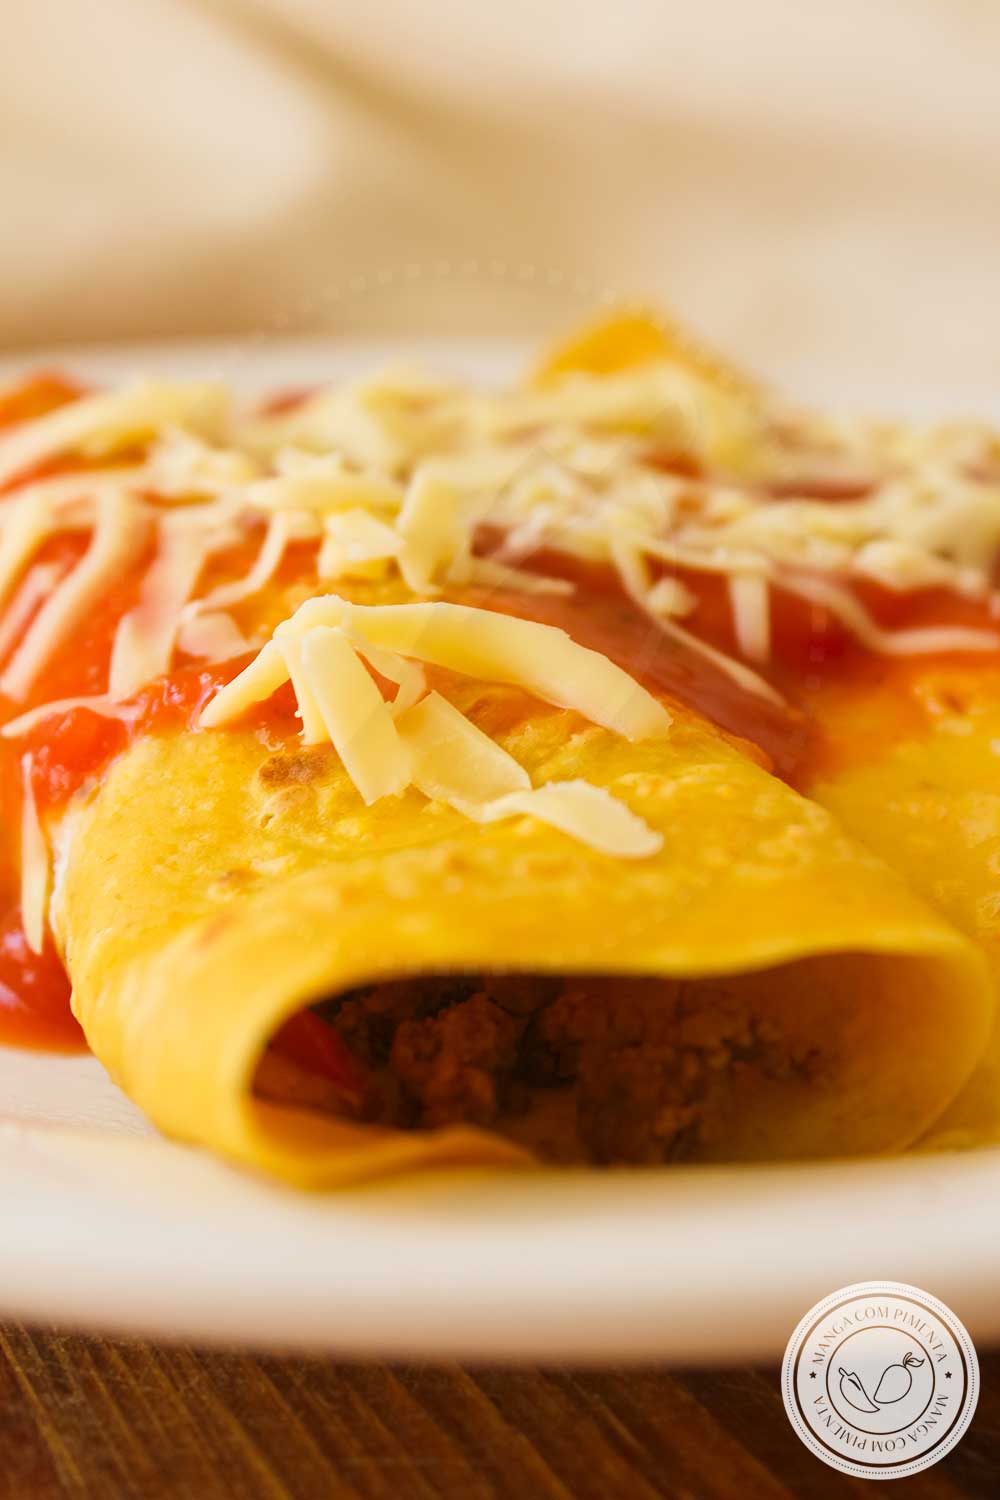 Receita de Panquecas de Cenoura recheadas com Carne Moída, um prato caseiro e delicioso para o almoço!